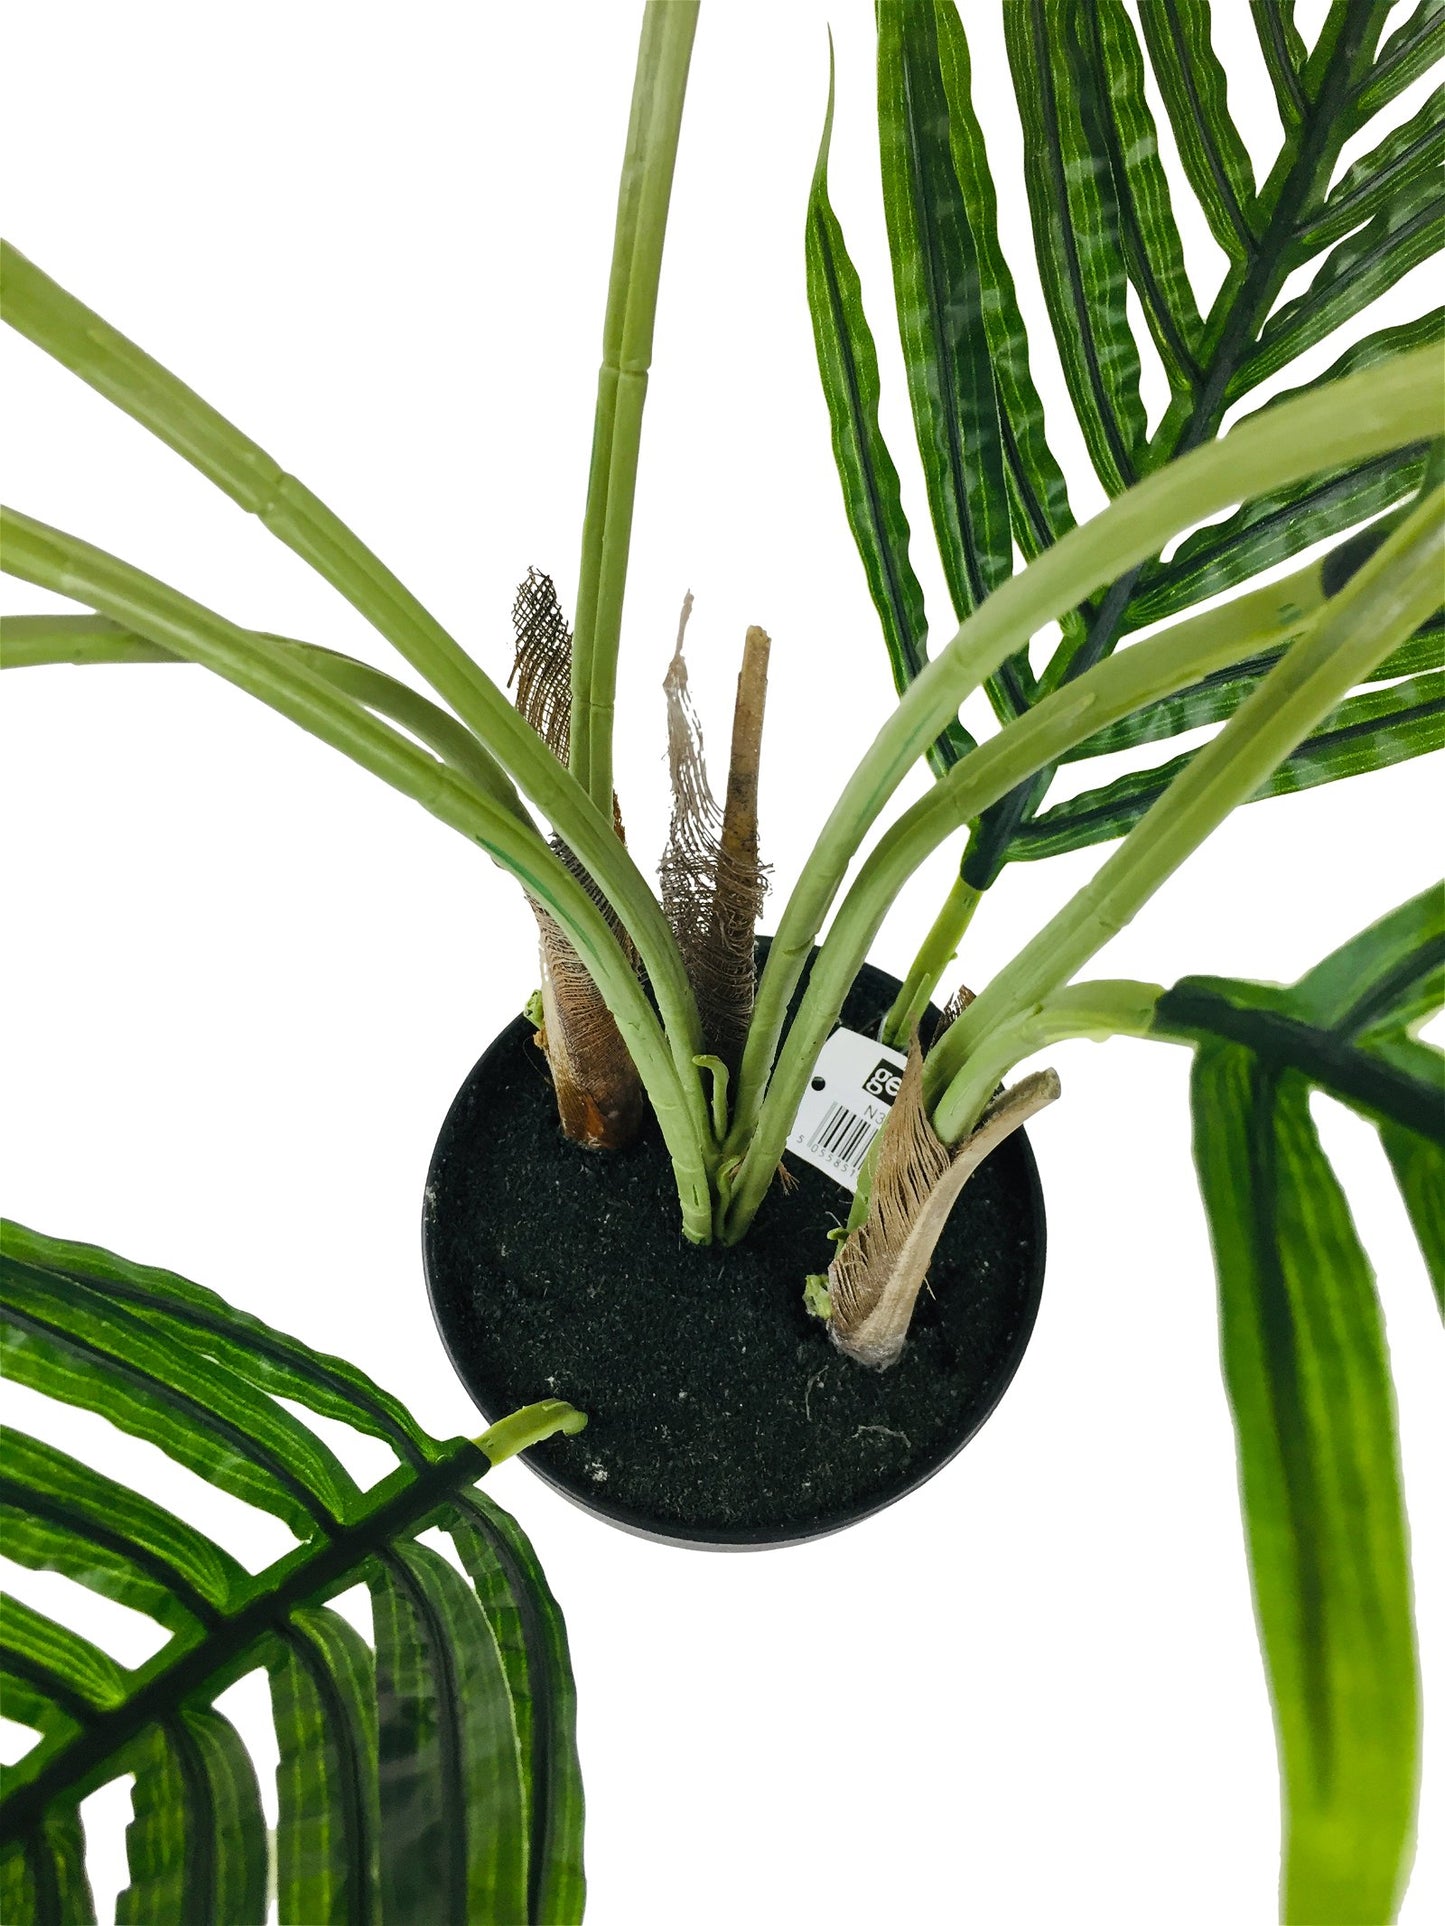 Artificial Palm Tree 65cm